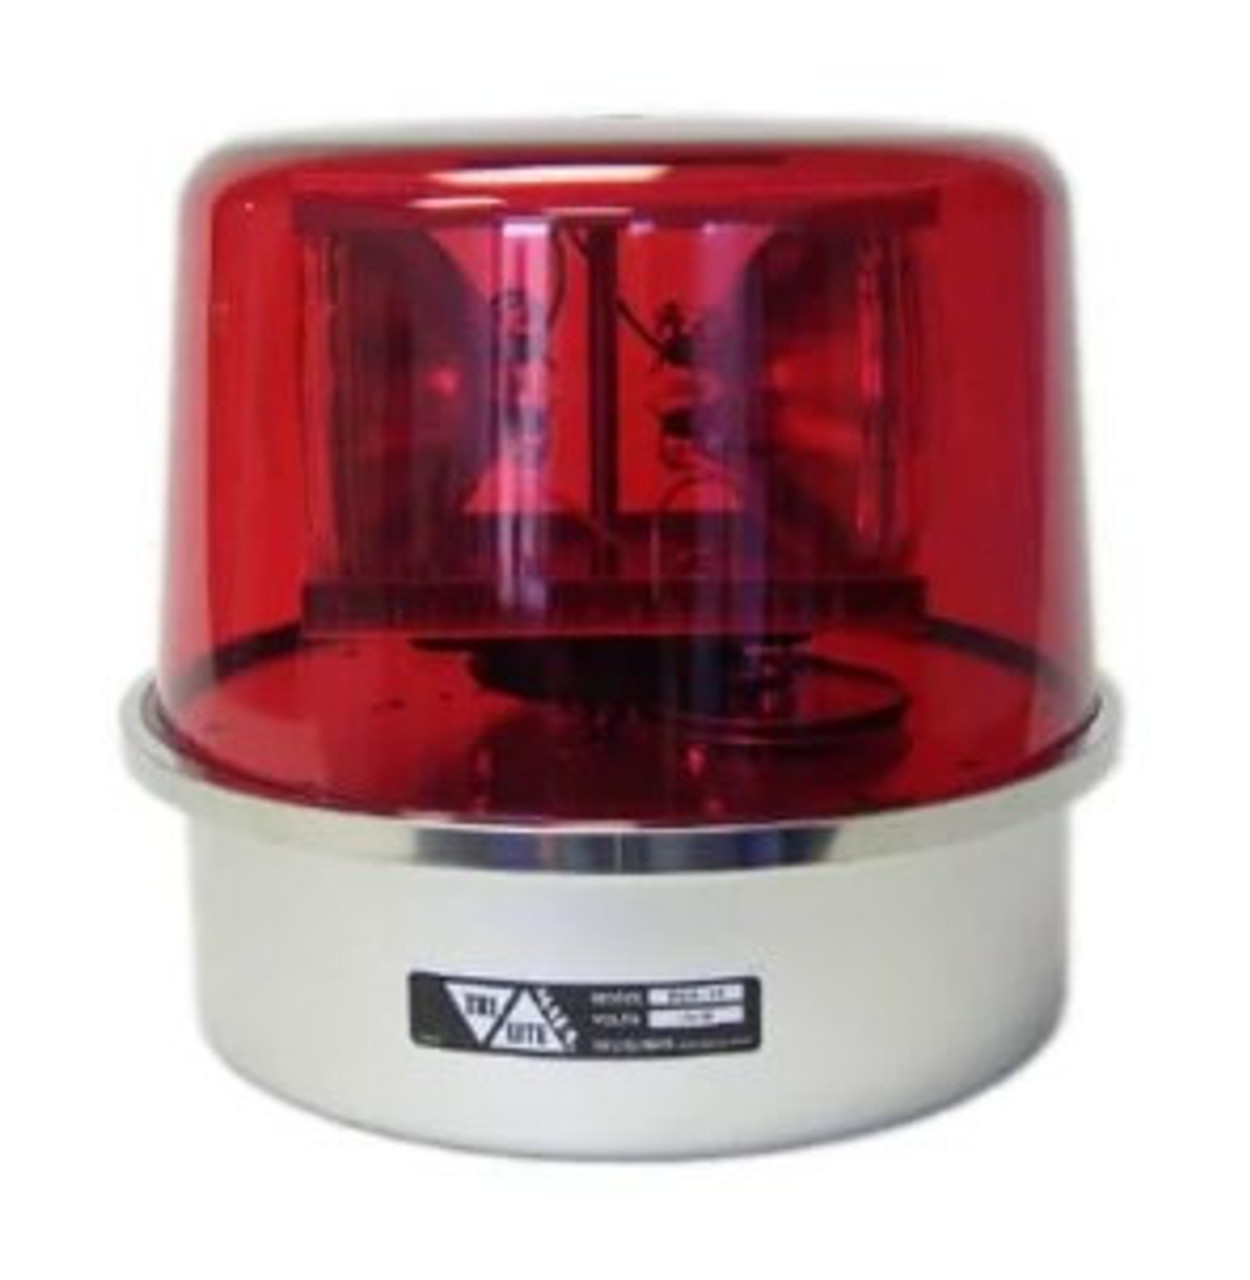 MARK12120P Tri Lite Rotating Warning Light 120v w/Permanent Mount